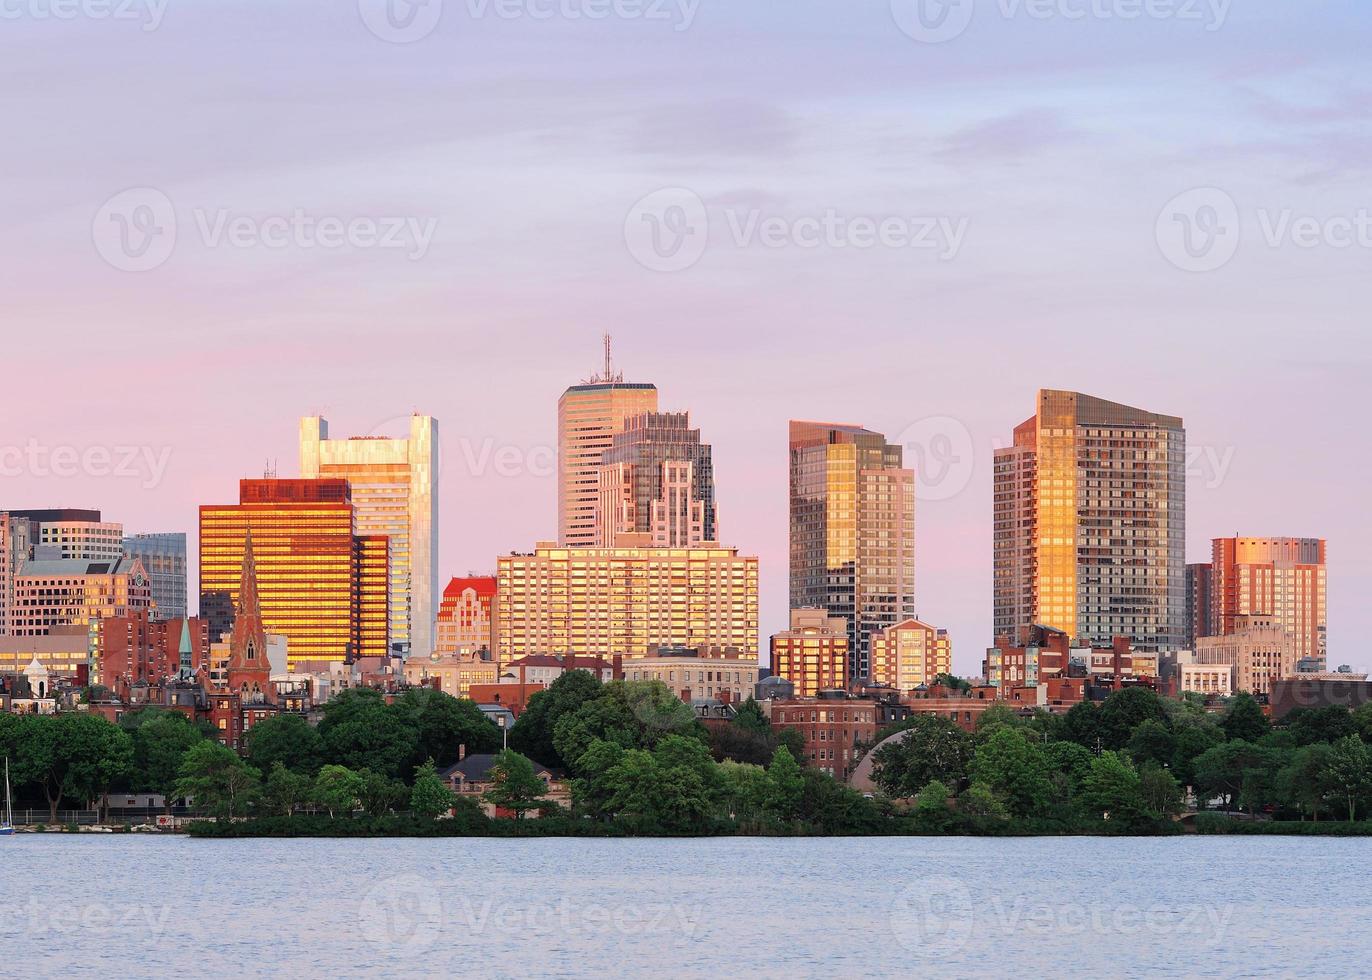 Boston-Sonnenuntergangansicht foto